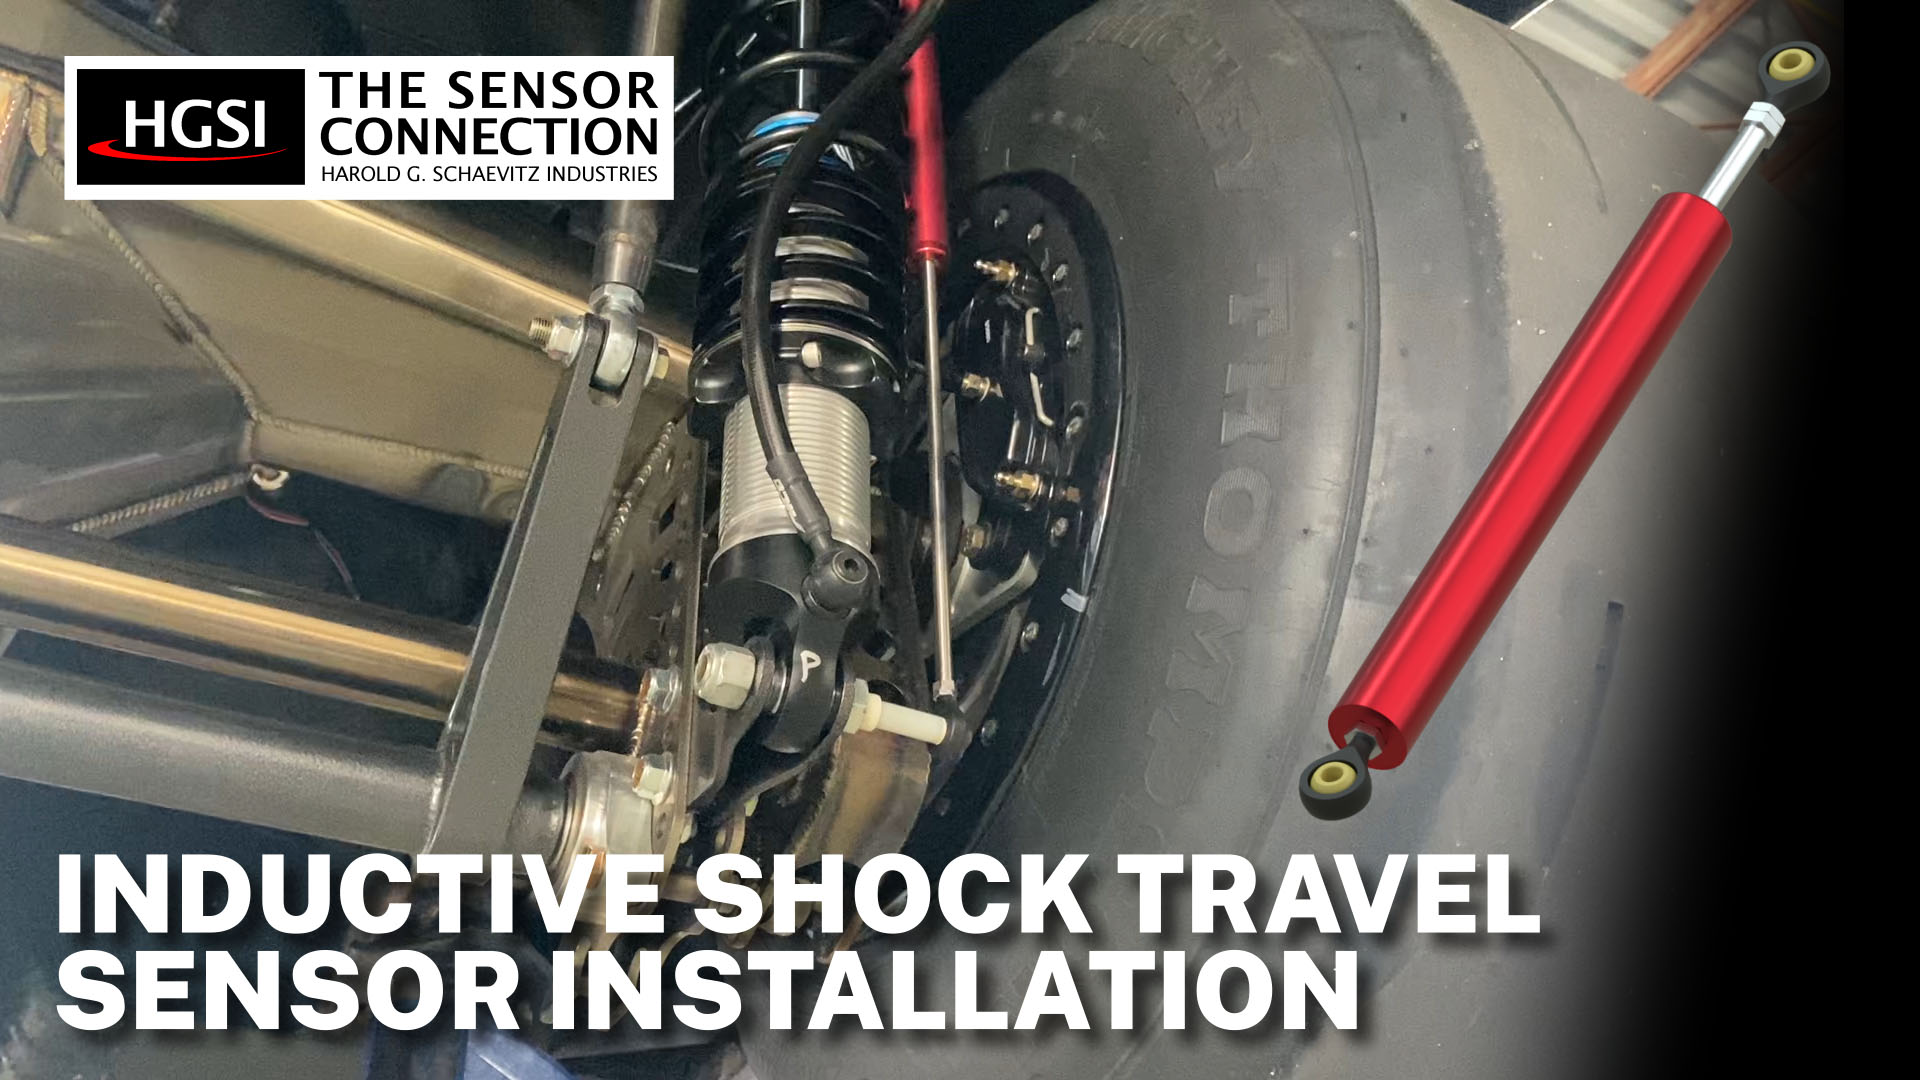 Inductive Shock Travel Sensor Installation Video Thumbnail